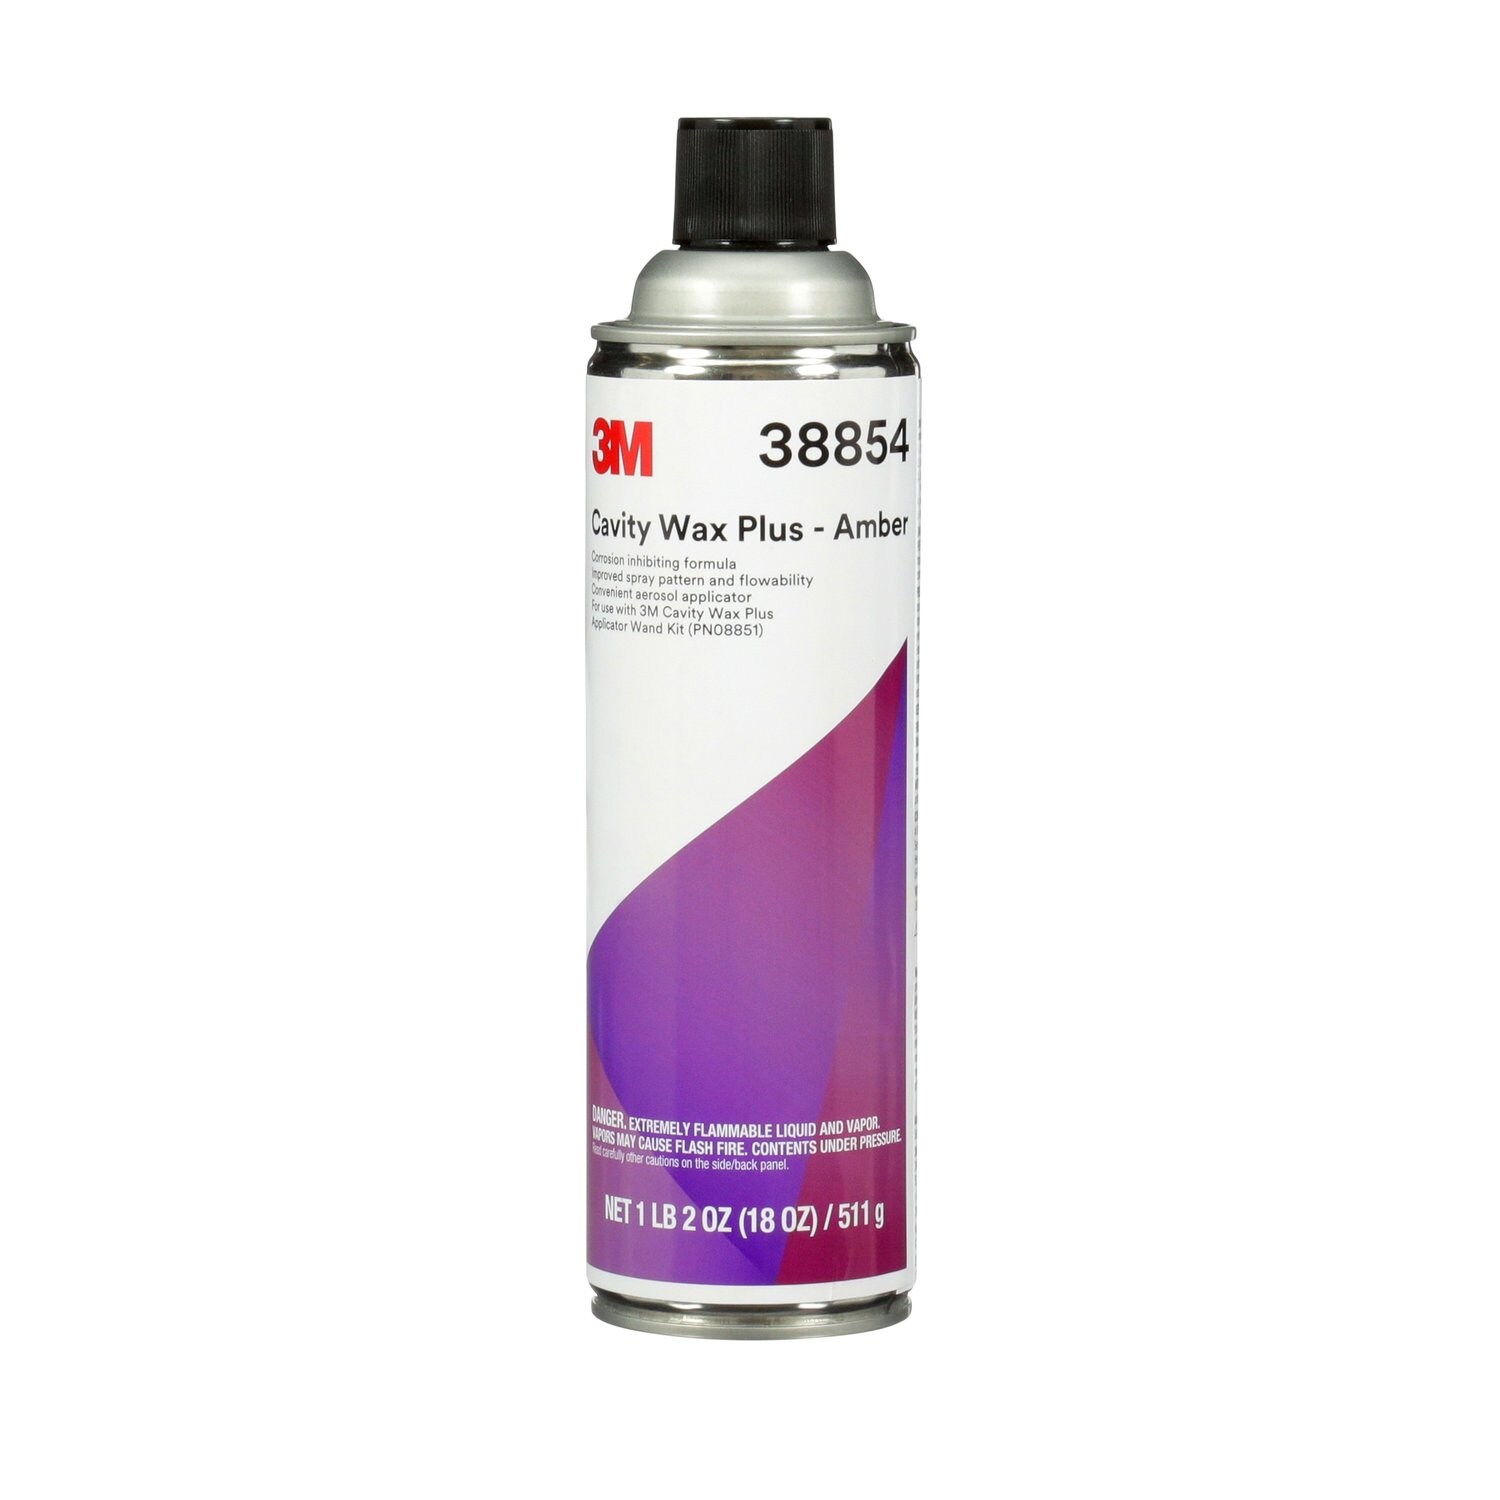 7100211448 - 3M Cavity Wax Plus, 38854, Amber, 18 oz (511 g), 4 cans per case